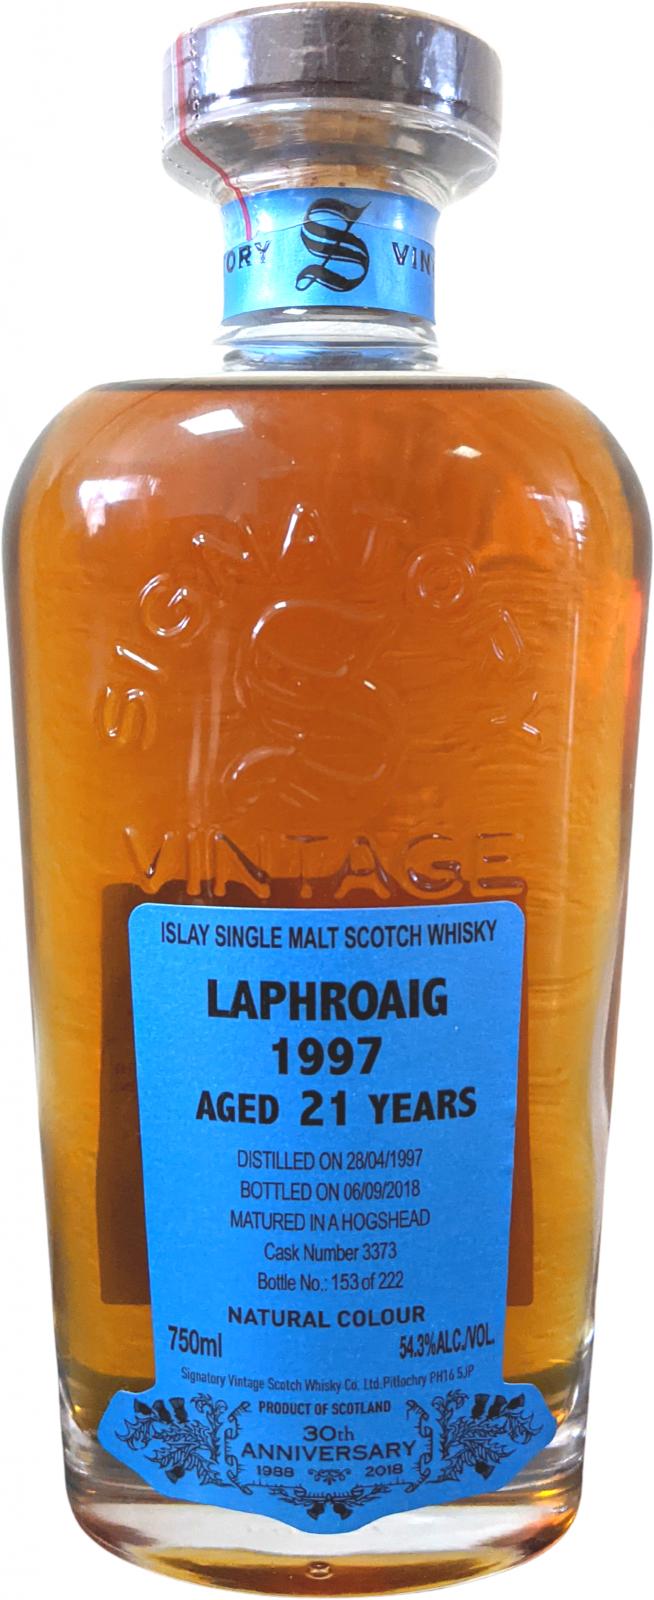 Laphroaig 1997 SV 30th Anniversary #3373 54.3% 750ml